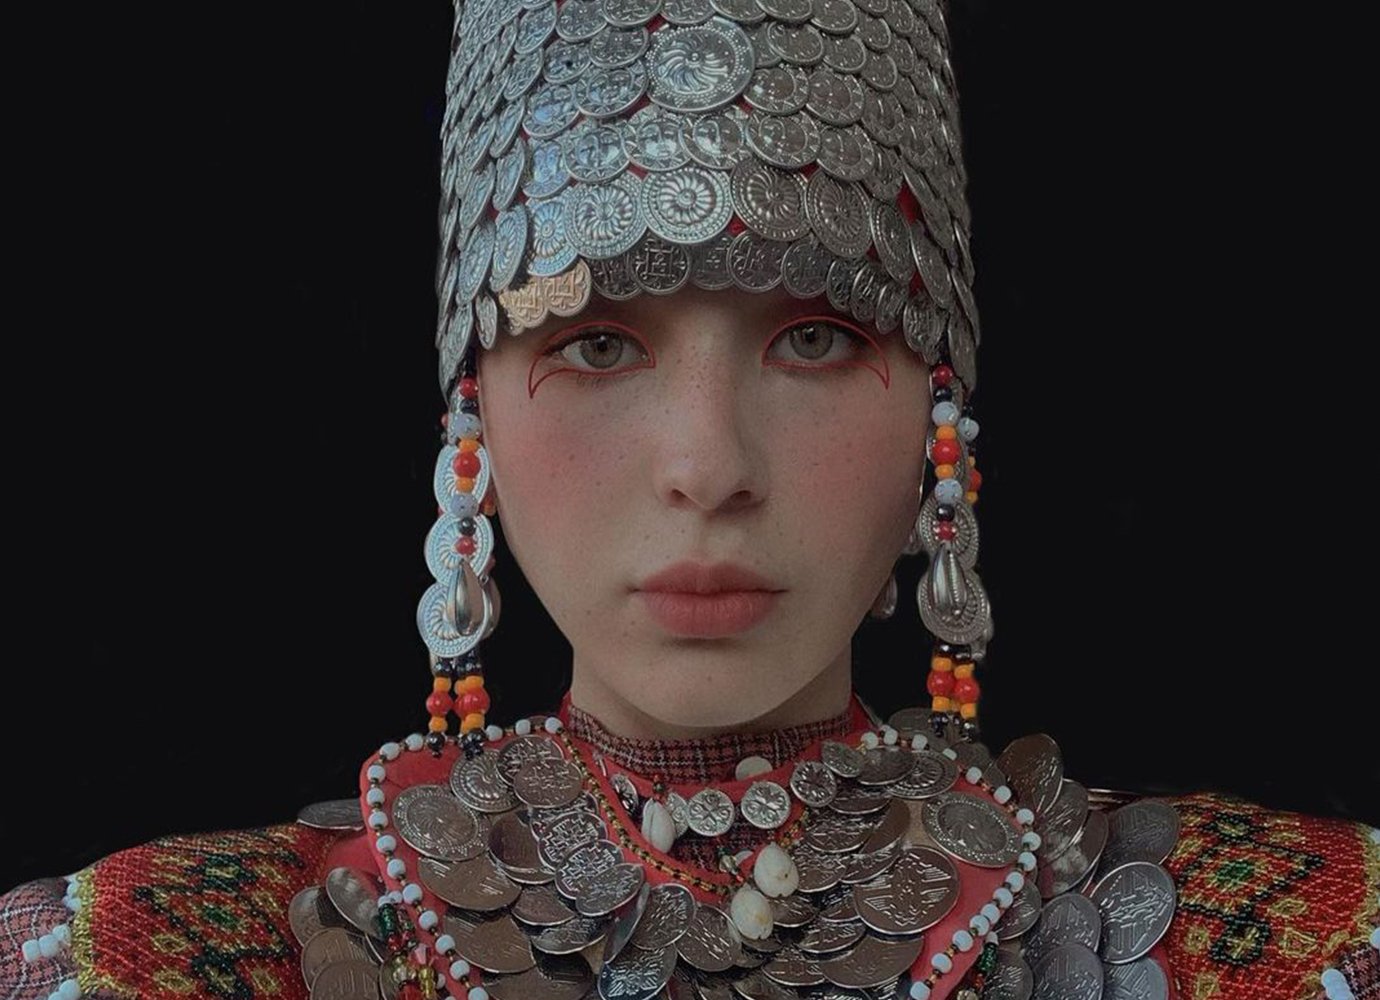 Zventa Sventana’s cyber-folk music video is a reimagining of Russian fairytales